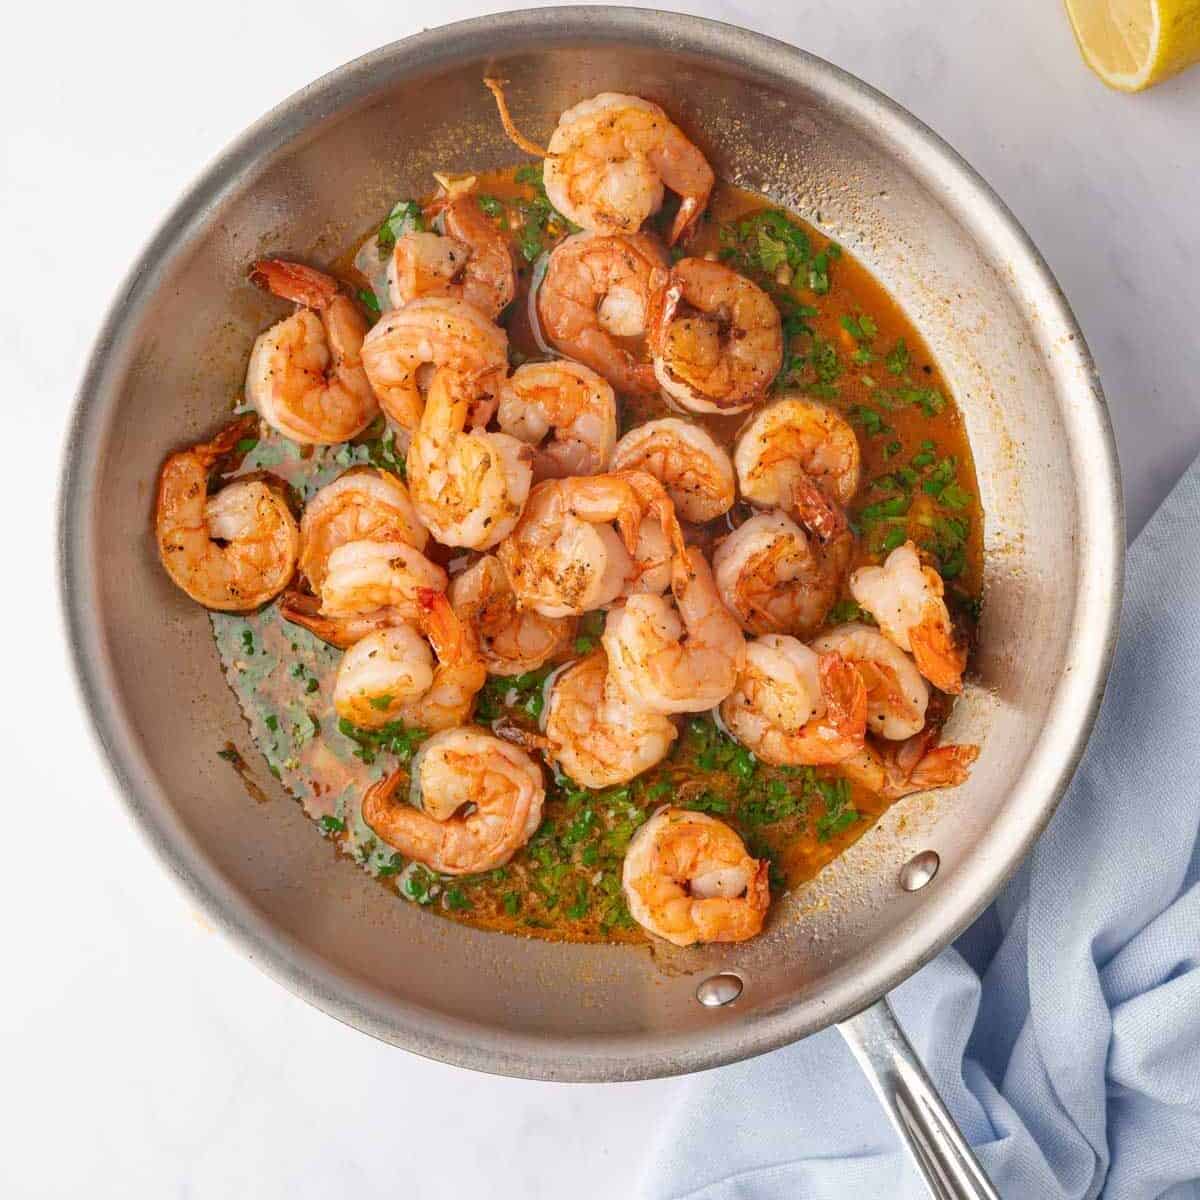 Toss shrimp in the spicy sauce.